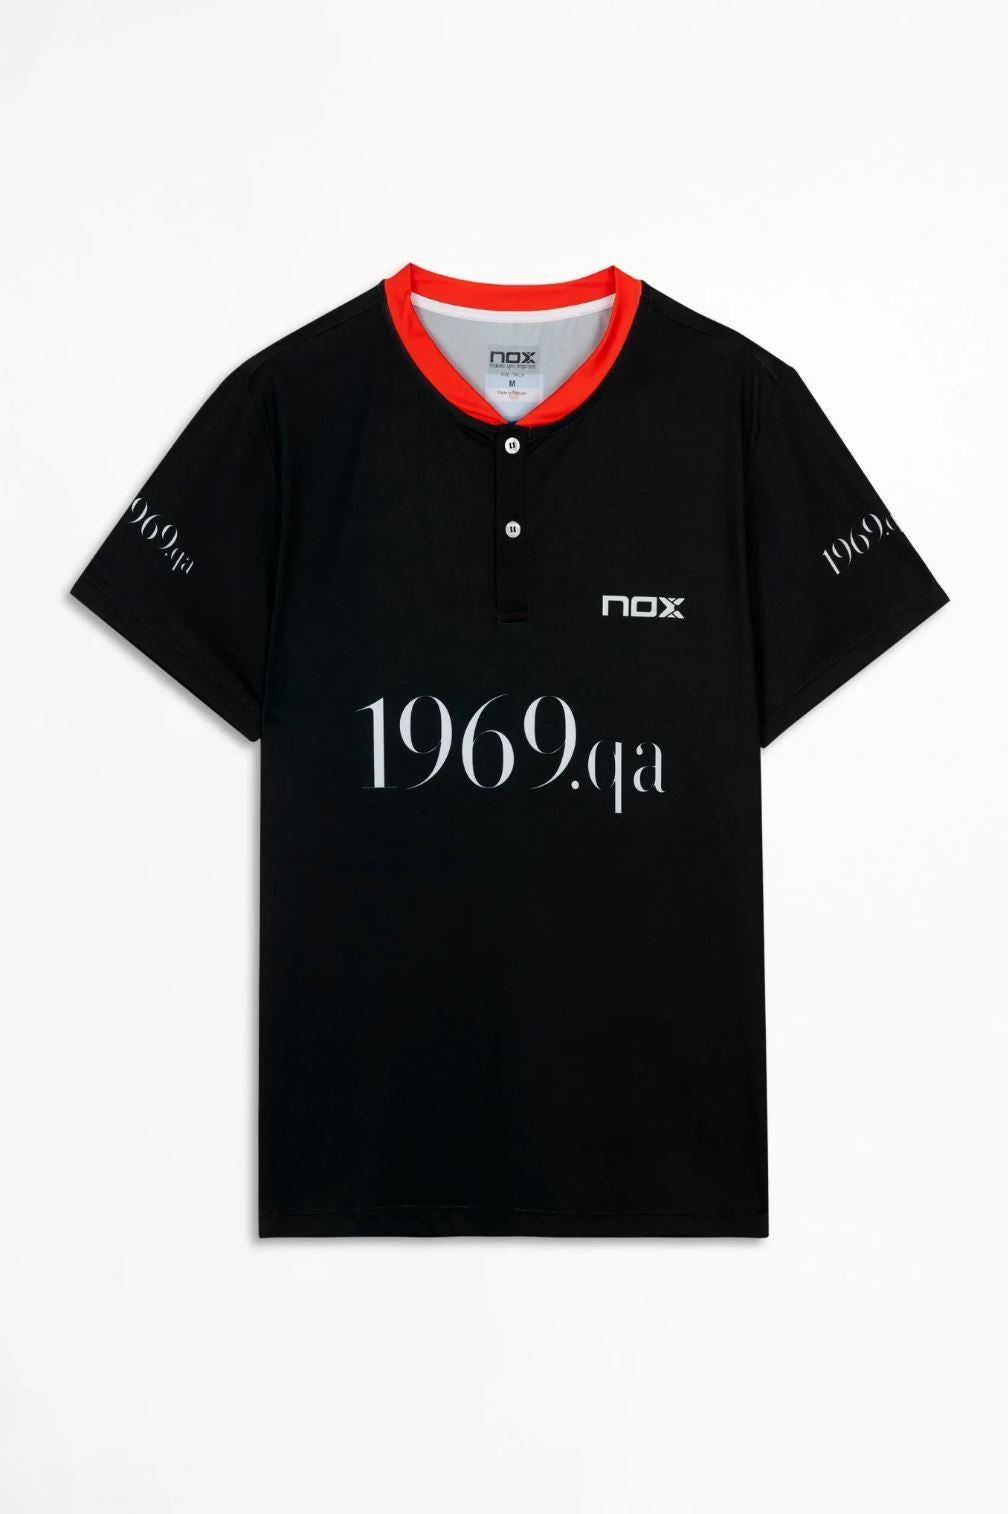 Nox Agustin Tapia Official Padel T-Shirt 2022/23 (Black)